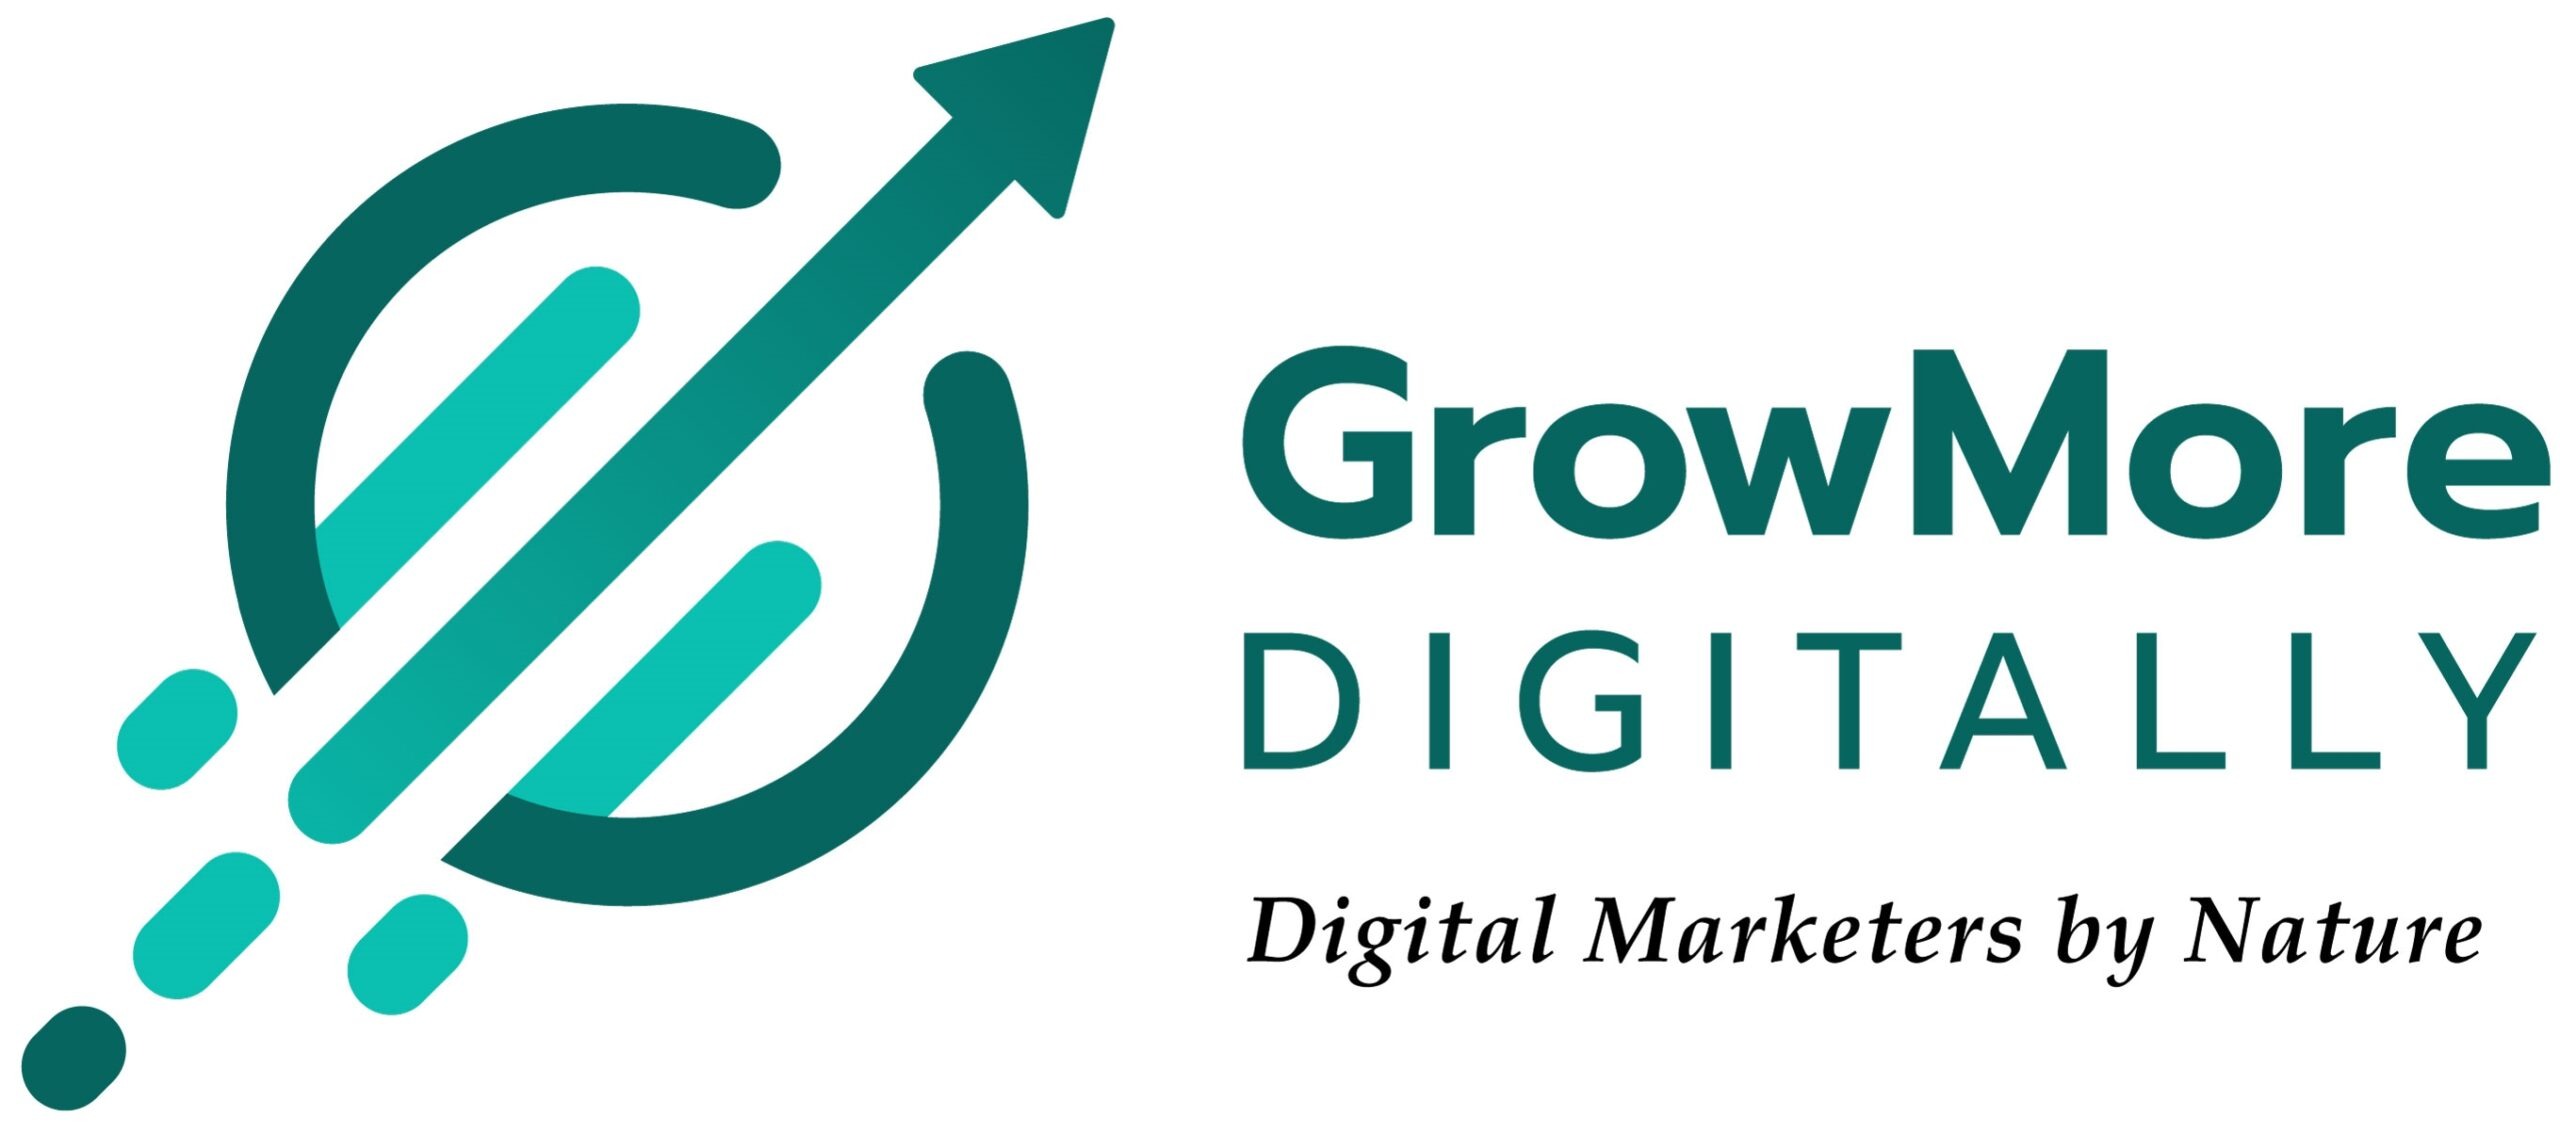 GrowMore Digitally